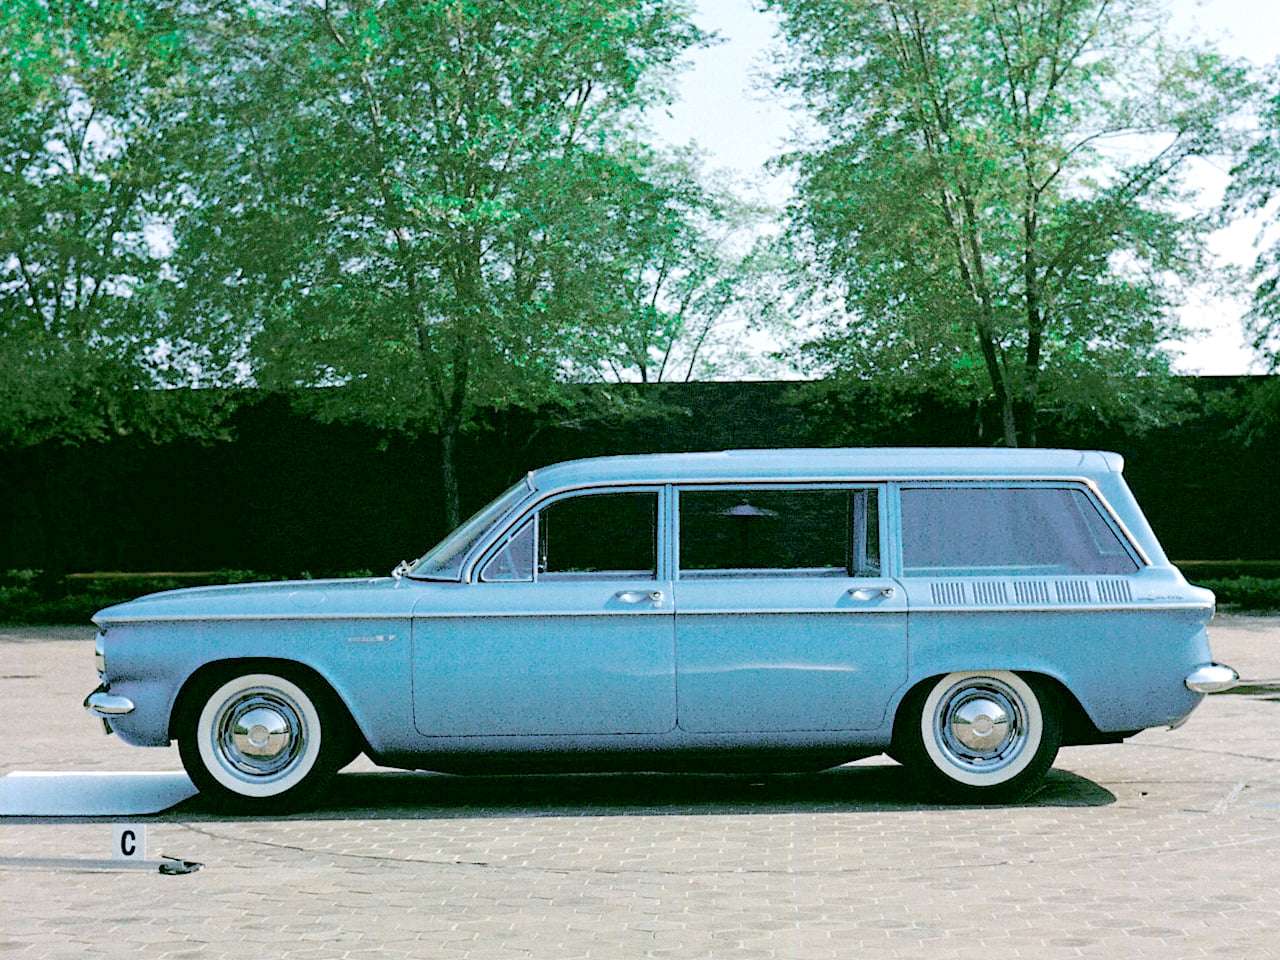 Chevrolet Corvair Deluxe 700 Lakewood 1961 року випуску пазл онлайн